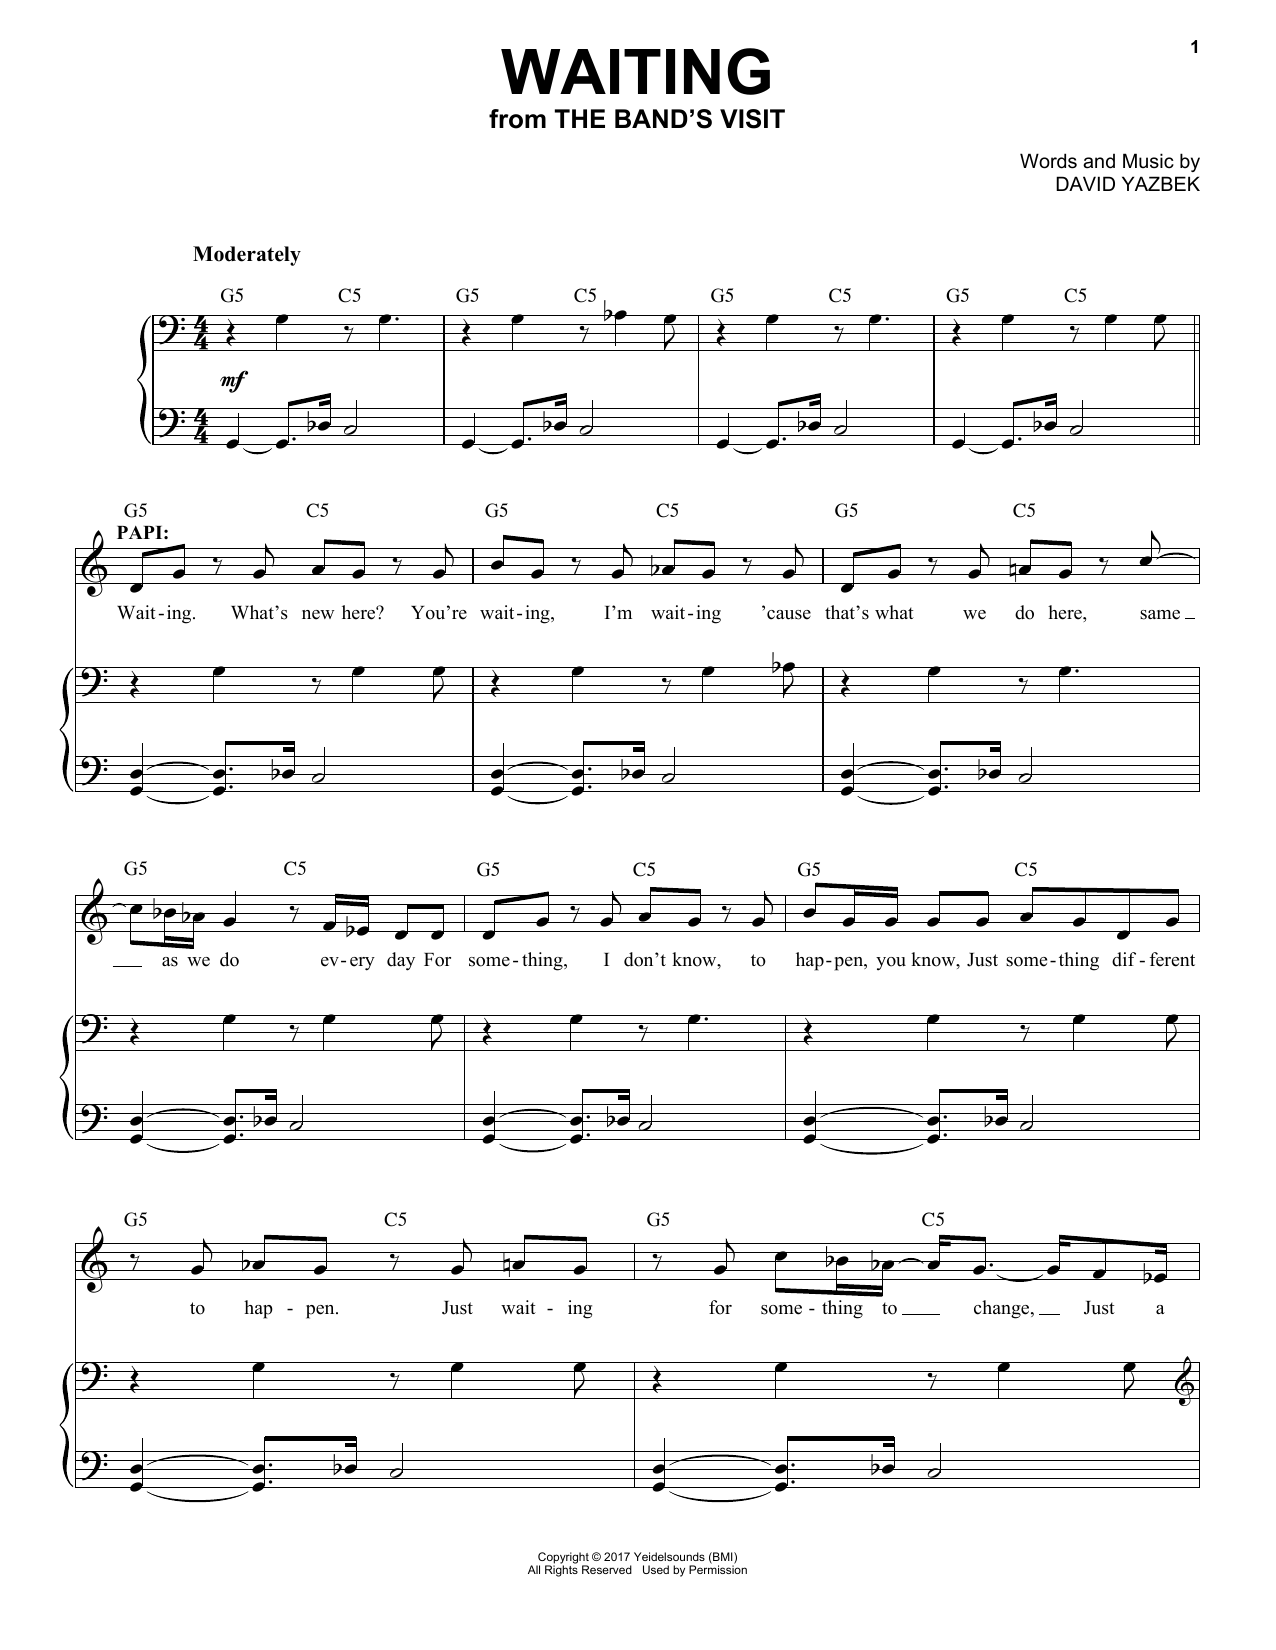 David Yazbek Waiting Sheet Music Notes & Chords for Piano & Vocal - Download or Print PDF